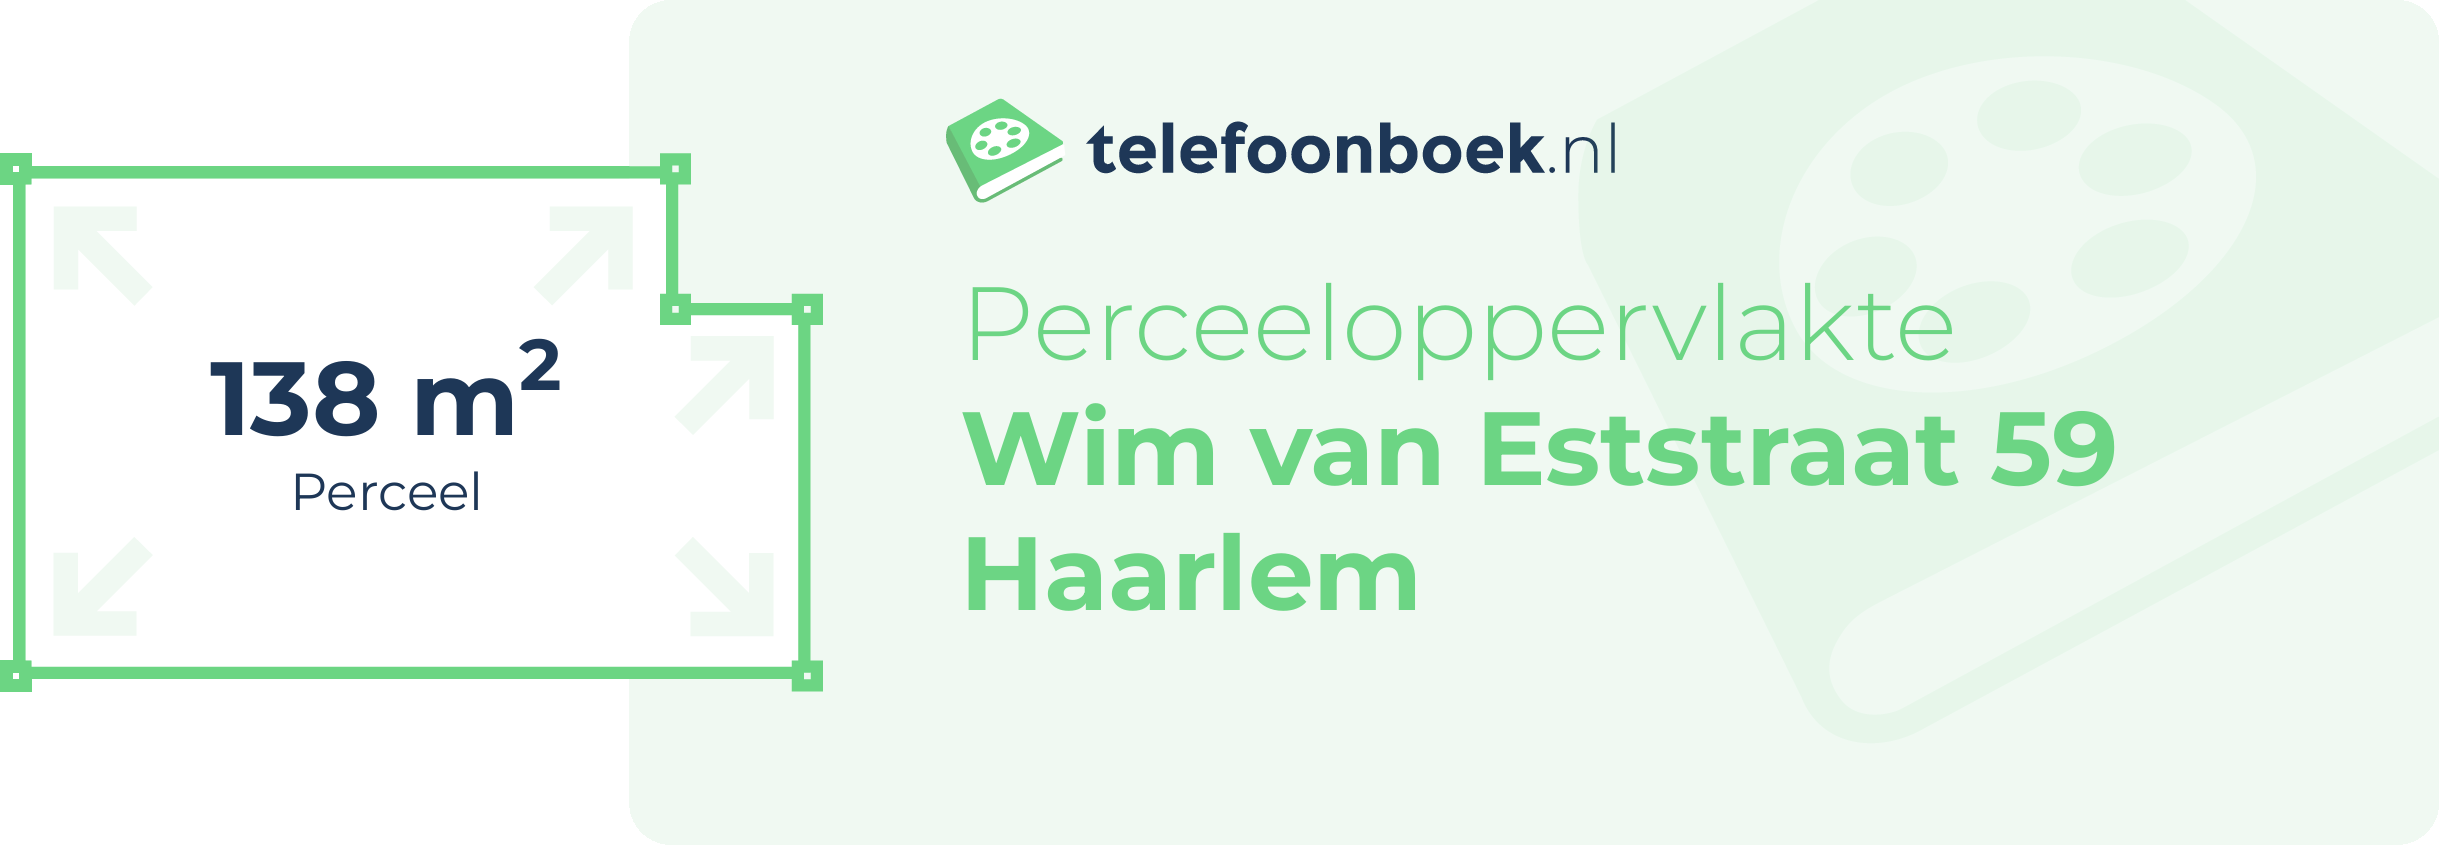 Perceeloppervlakte Wim Van Eststraat 59 Haarlem